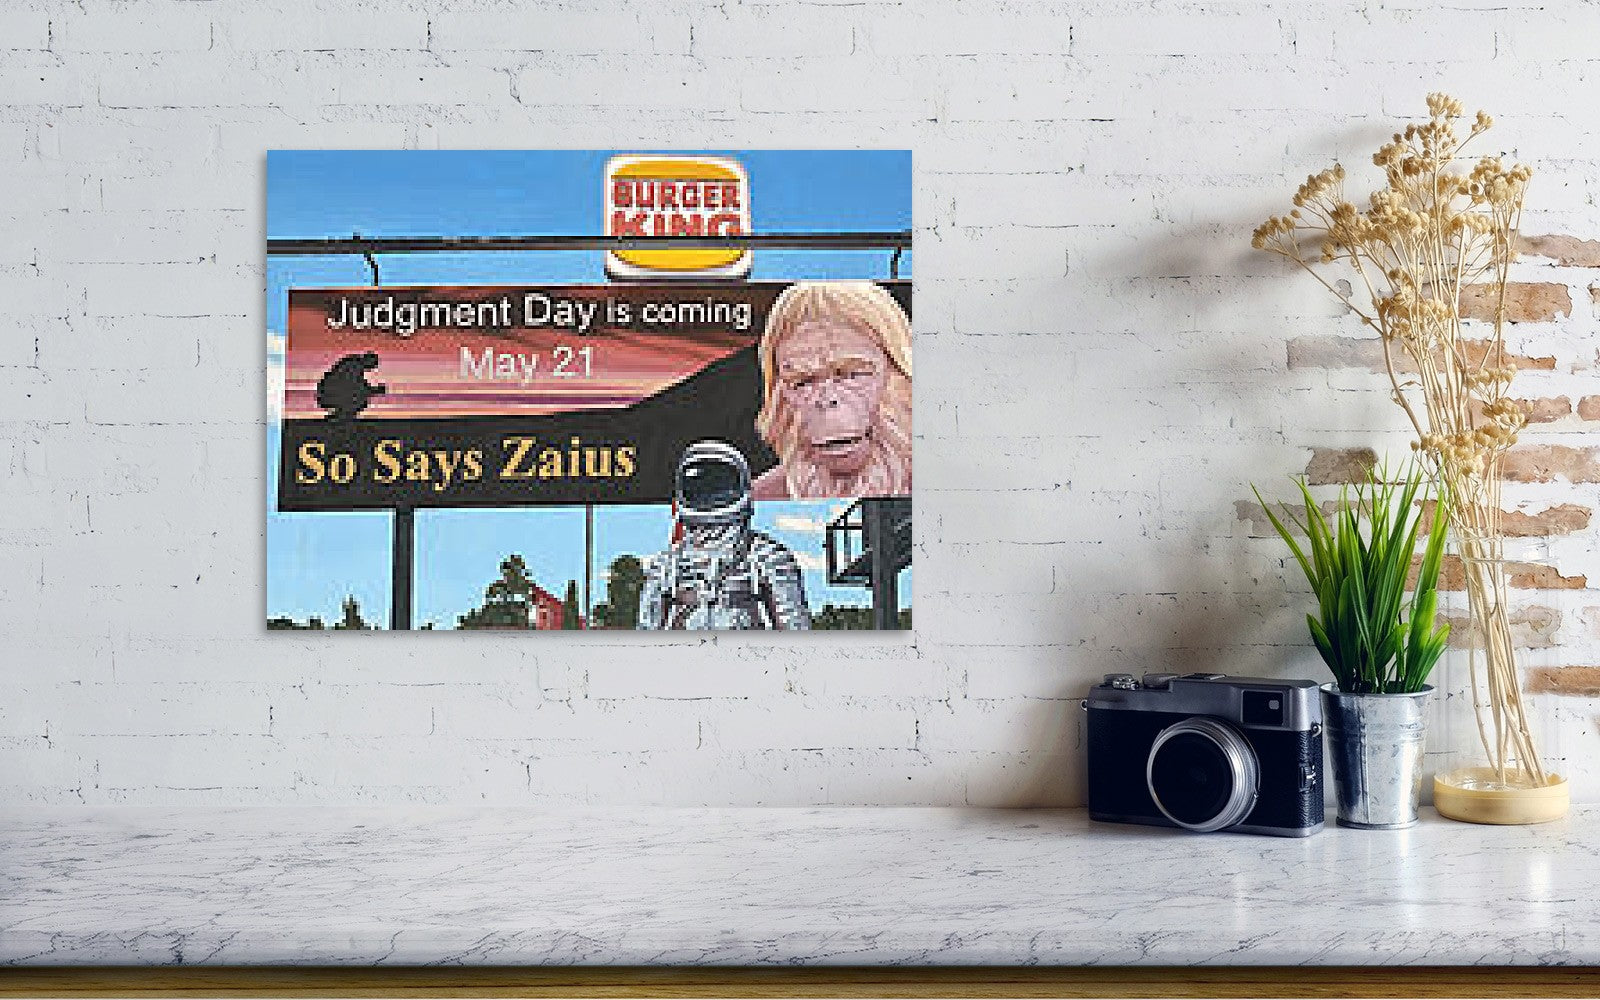 So Says Zaius Art Print Canvas And Poster, Warm Home Decor Wall Art Visual Art 1617268387140.jpg